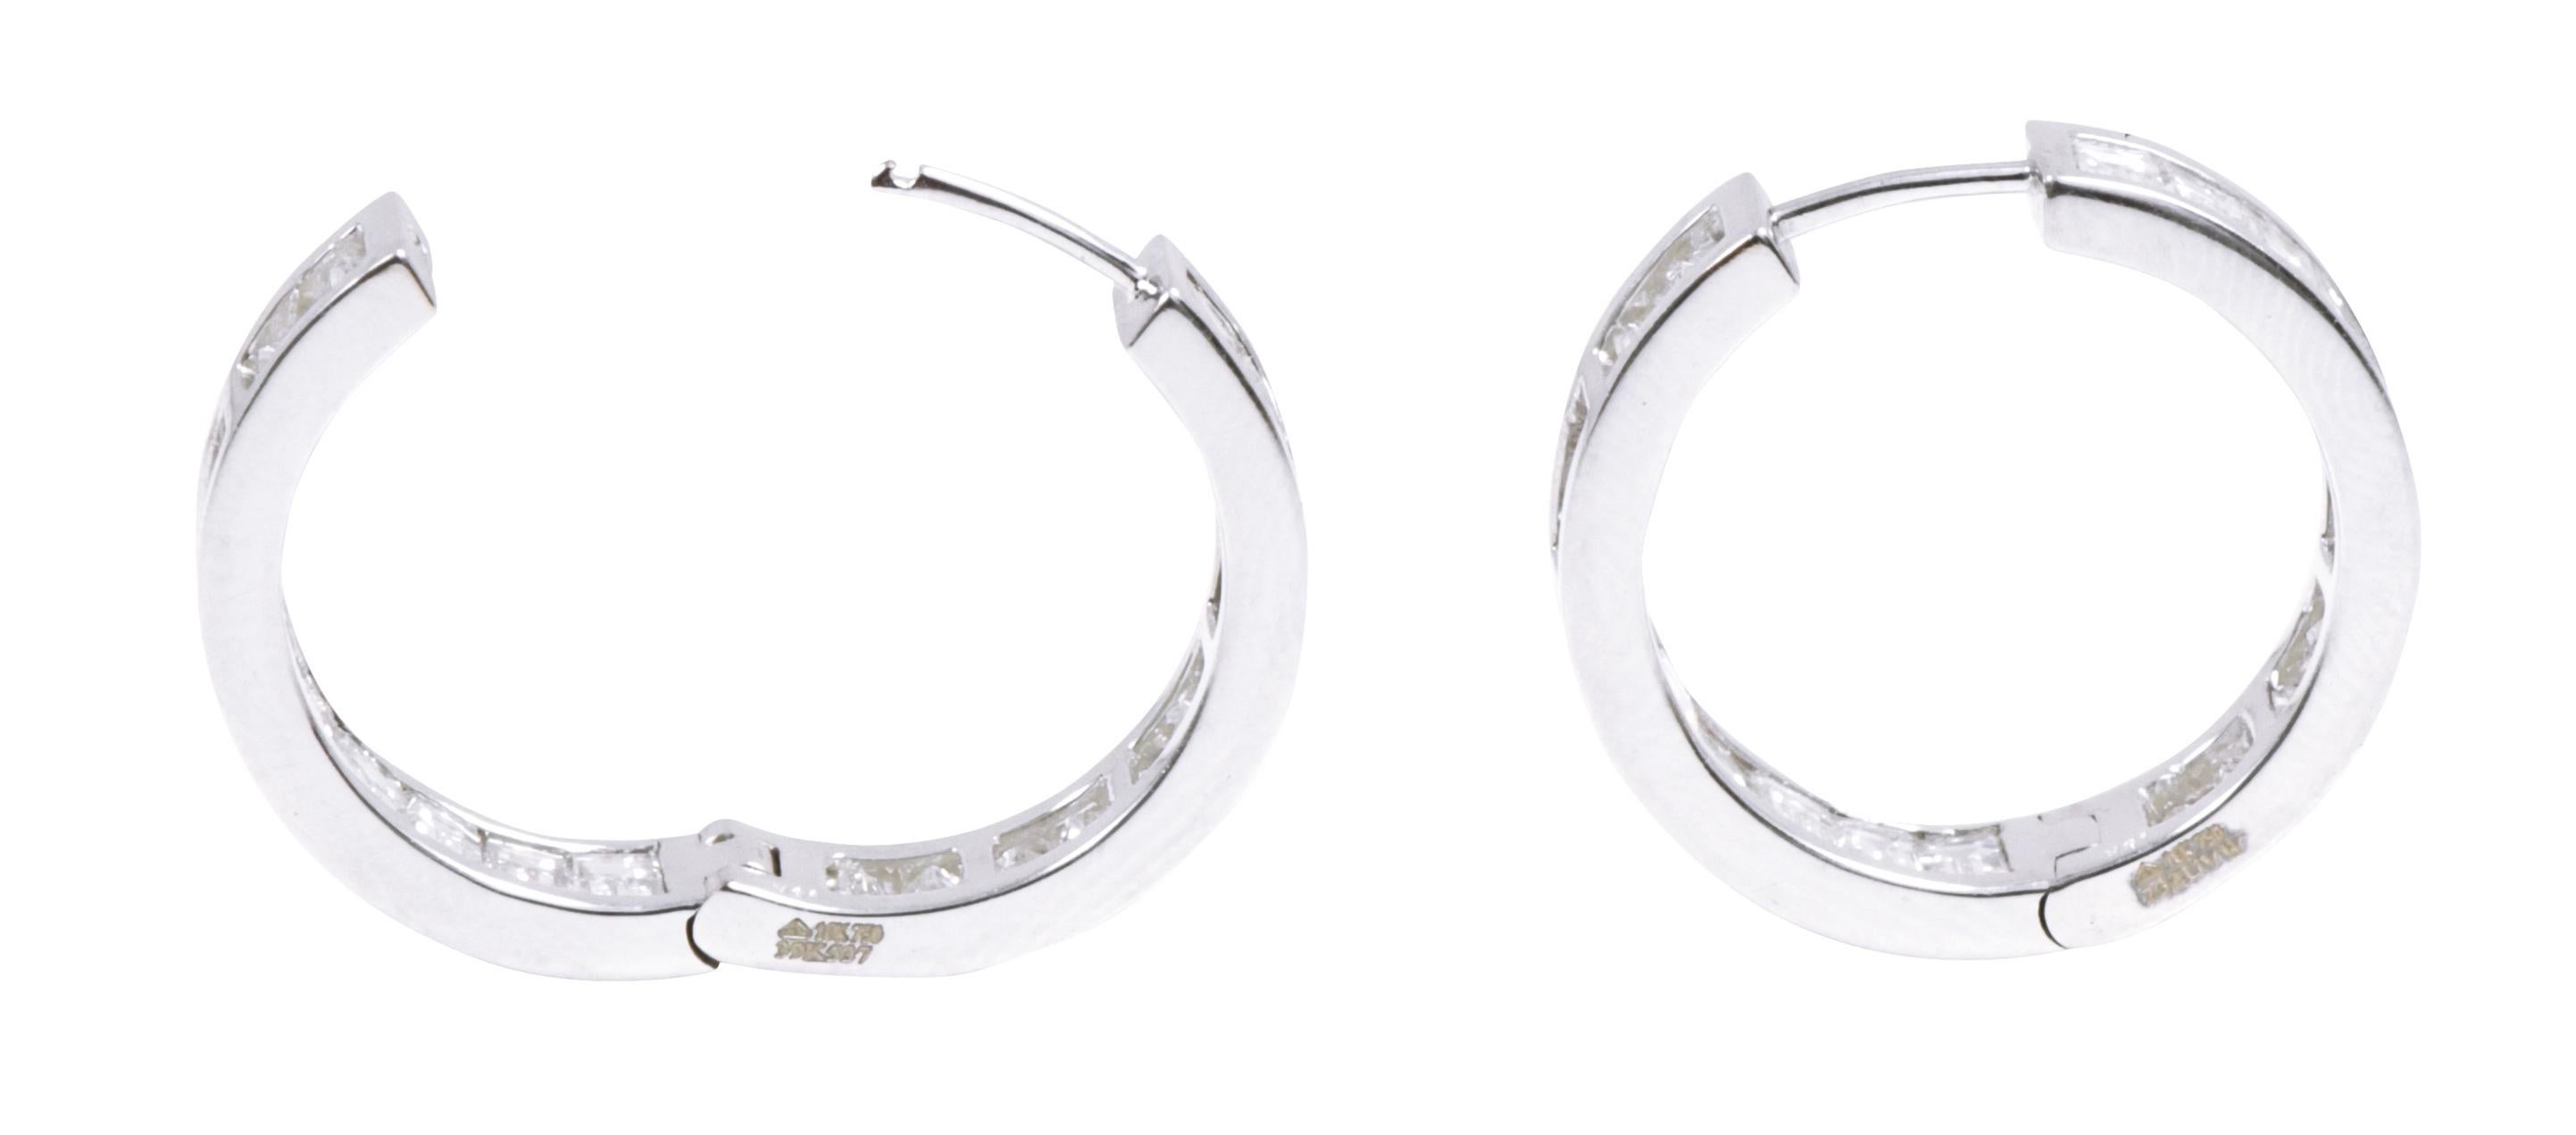 18 Karat White Gold 5.14 Carat Diamond Hoop Earrings in Bezel Setting For Sale 2